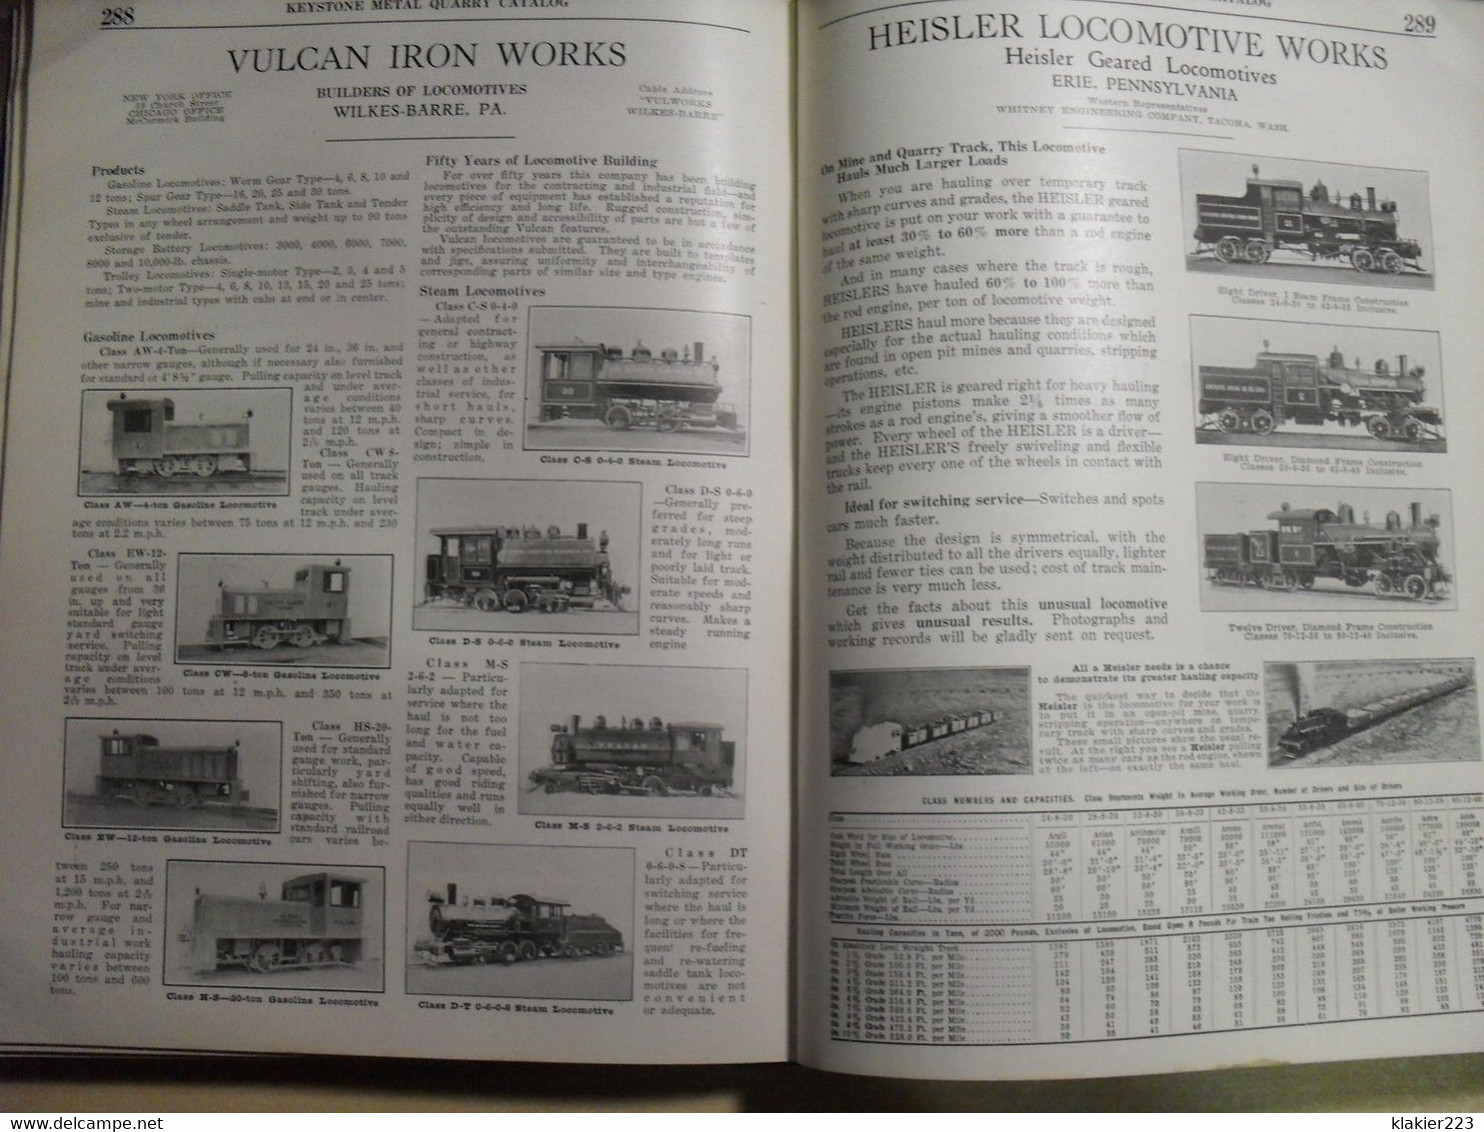 Keystone Metal Quarry Catalog 1927 - Ingegneria